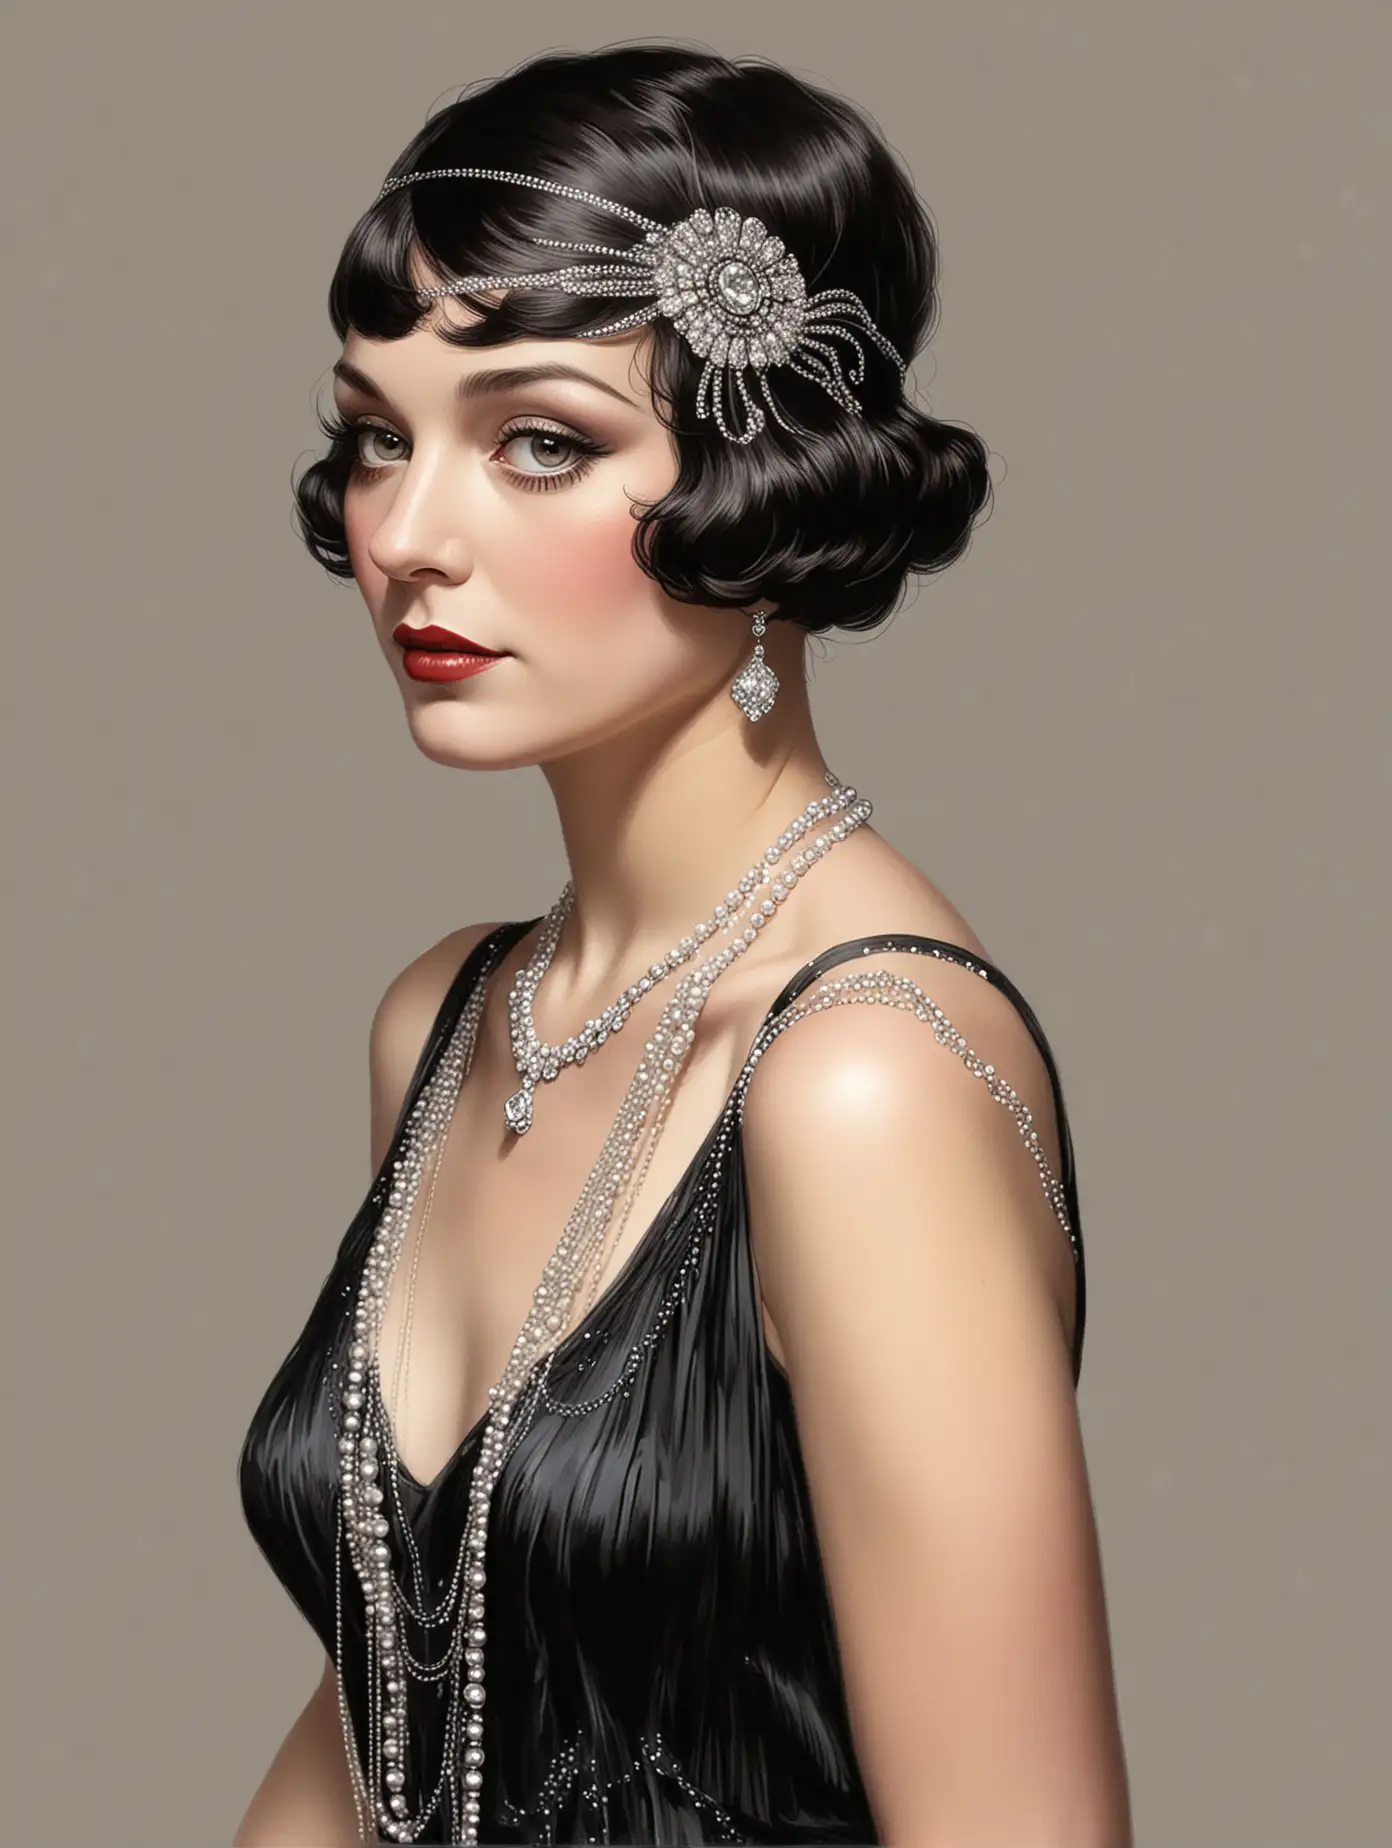 Elegant 1920s Flapper Woman Portrait with Jewelry and Black Dress